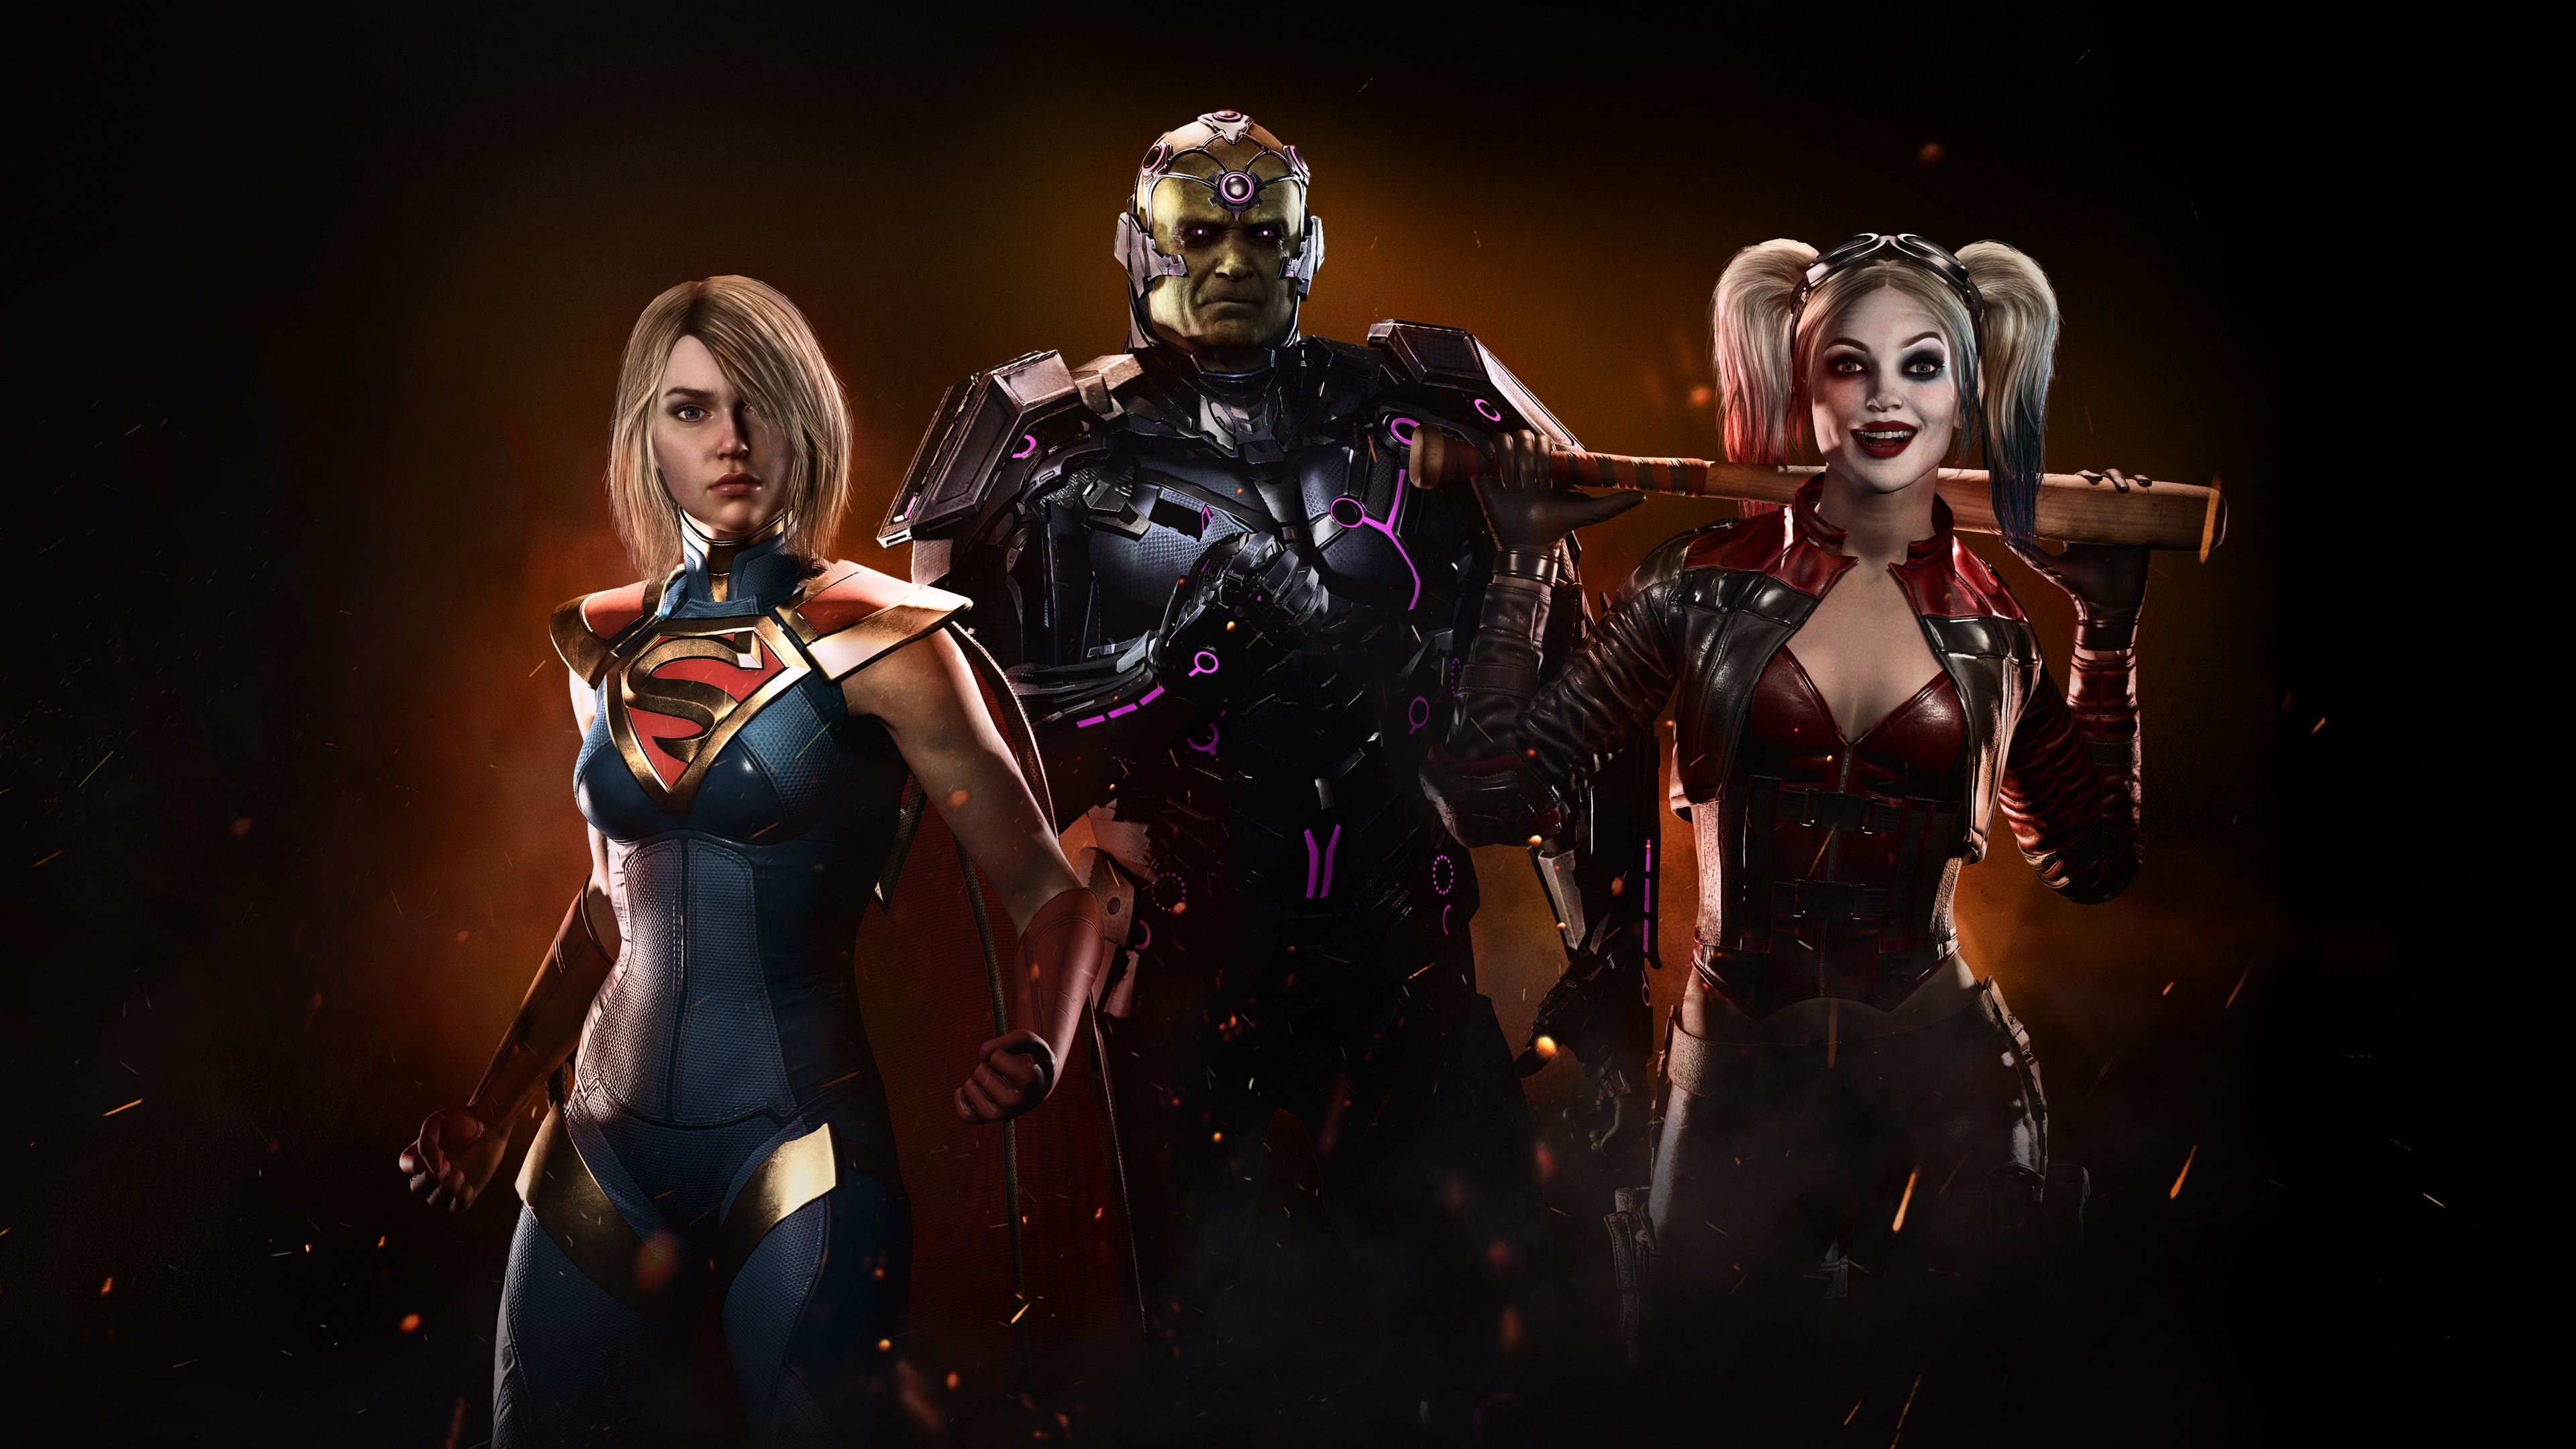 Injustice 2, Supergirl's might, Heroine wallpapers, Superpower, 3840x2160 4K Desktop